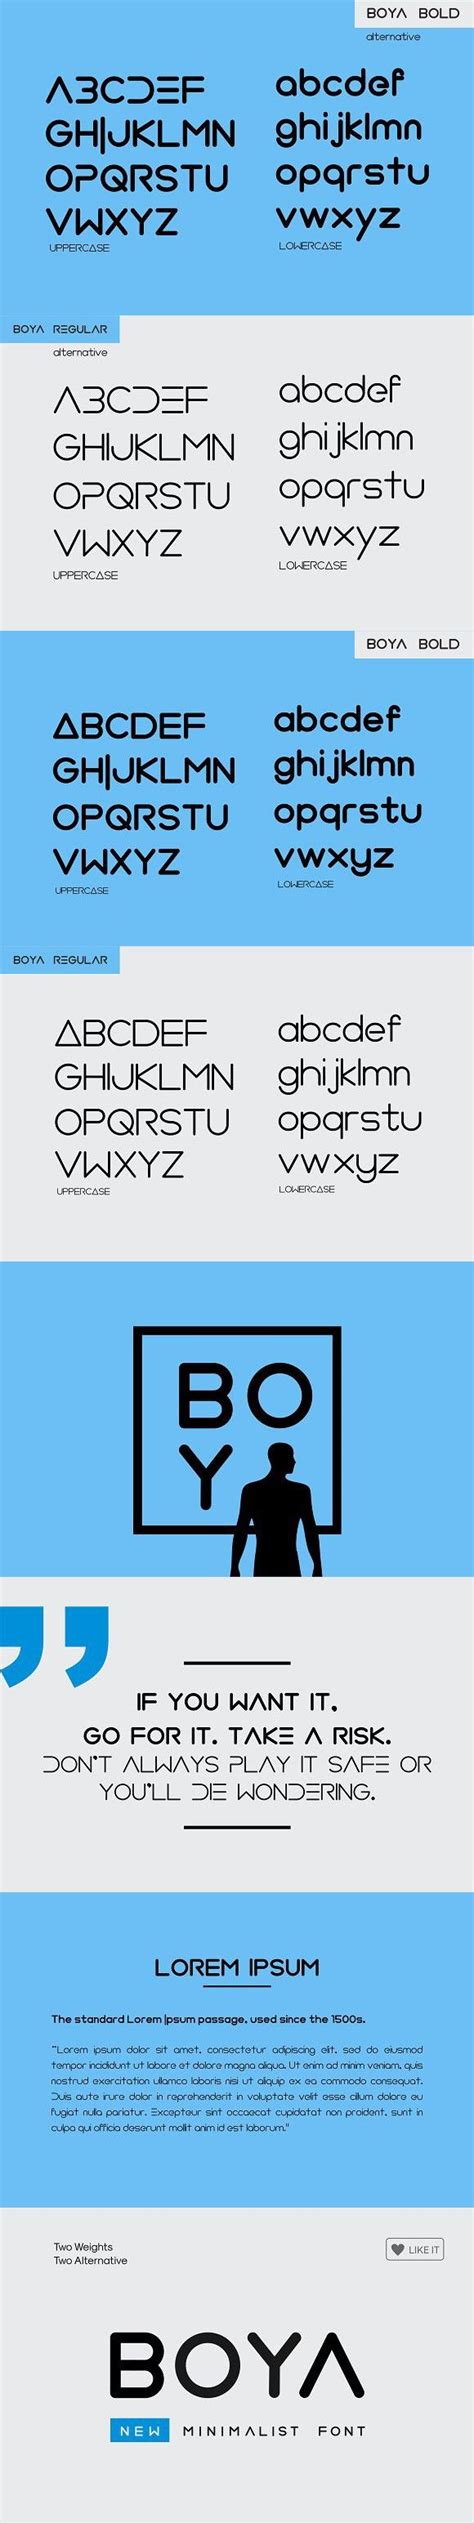 Boya Rounded Font Round Font Logo Fonts Typography Design